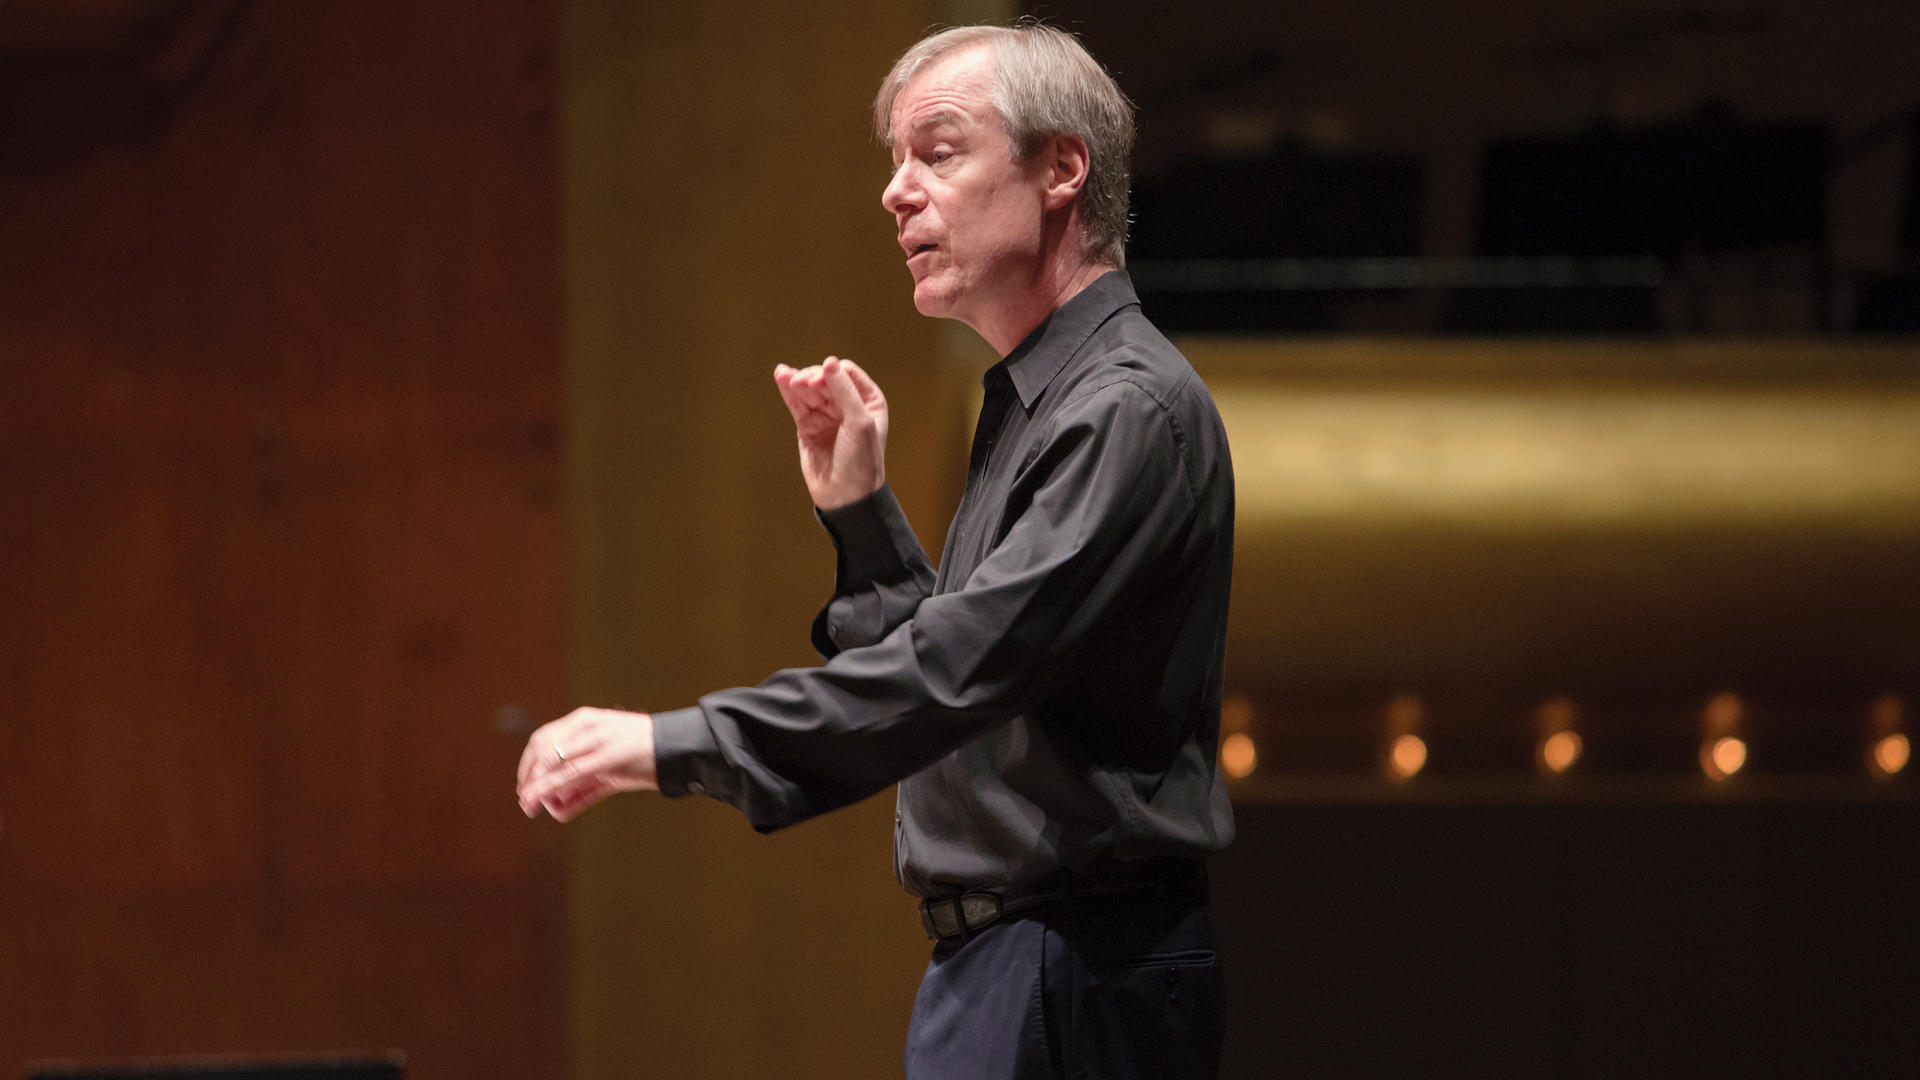 Conductor David Robertson